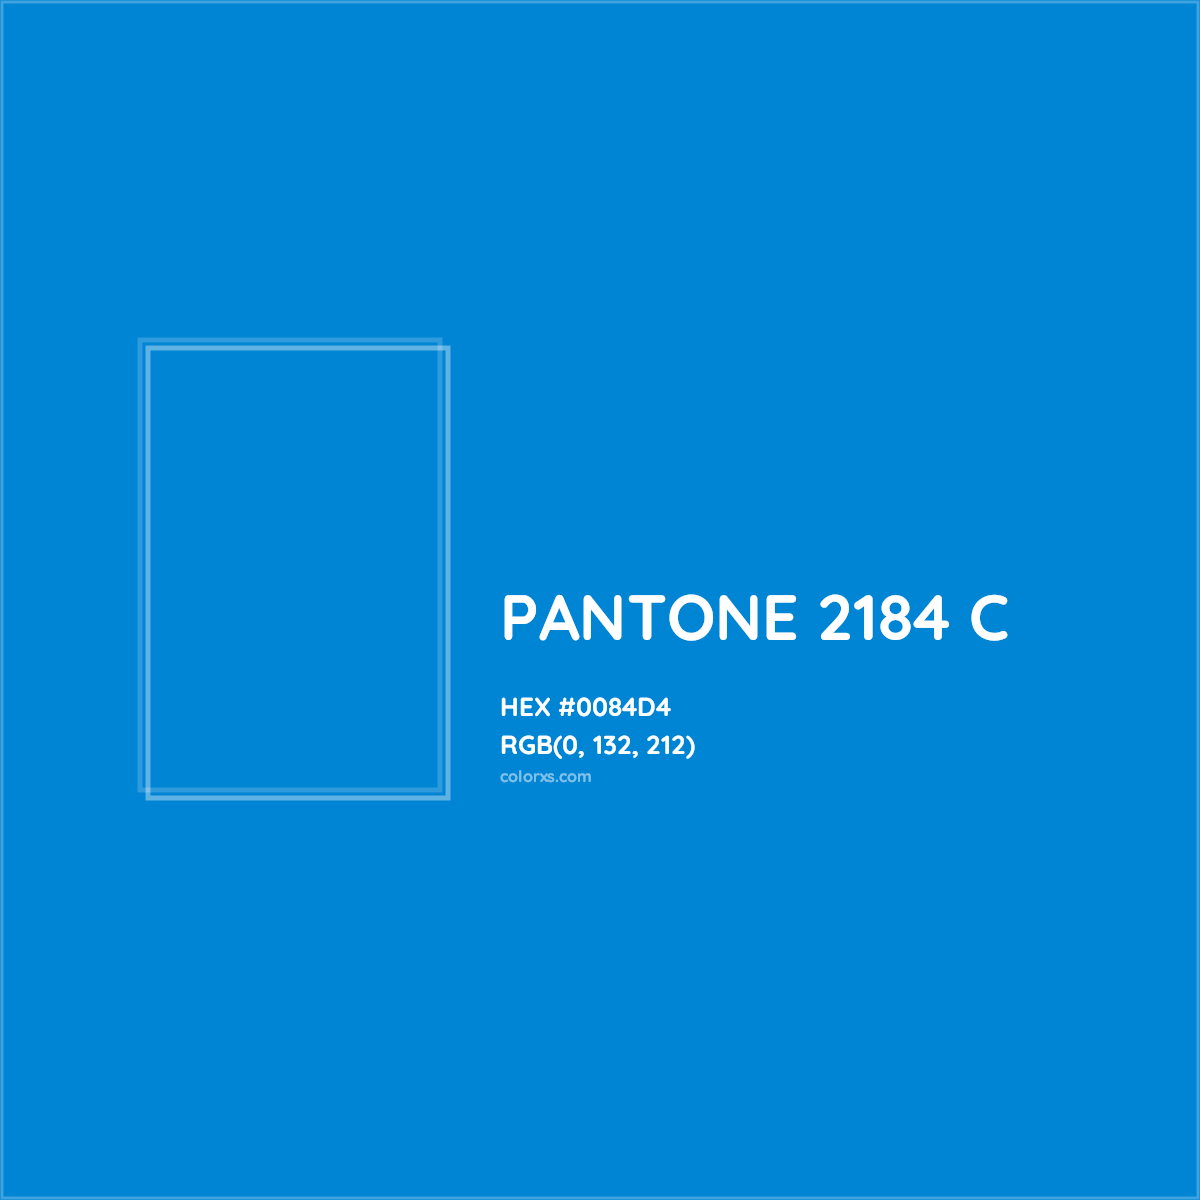 HEX #0084D4 PANTONE 2184 C CMS Pantone PMS - Color Code